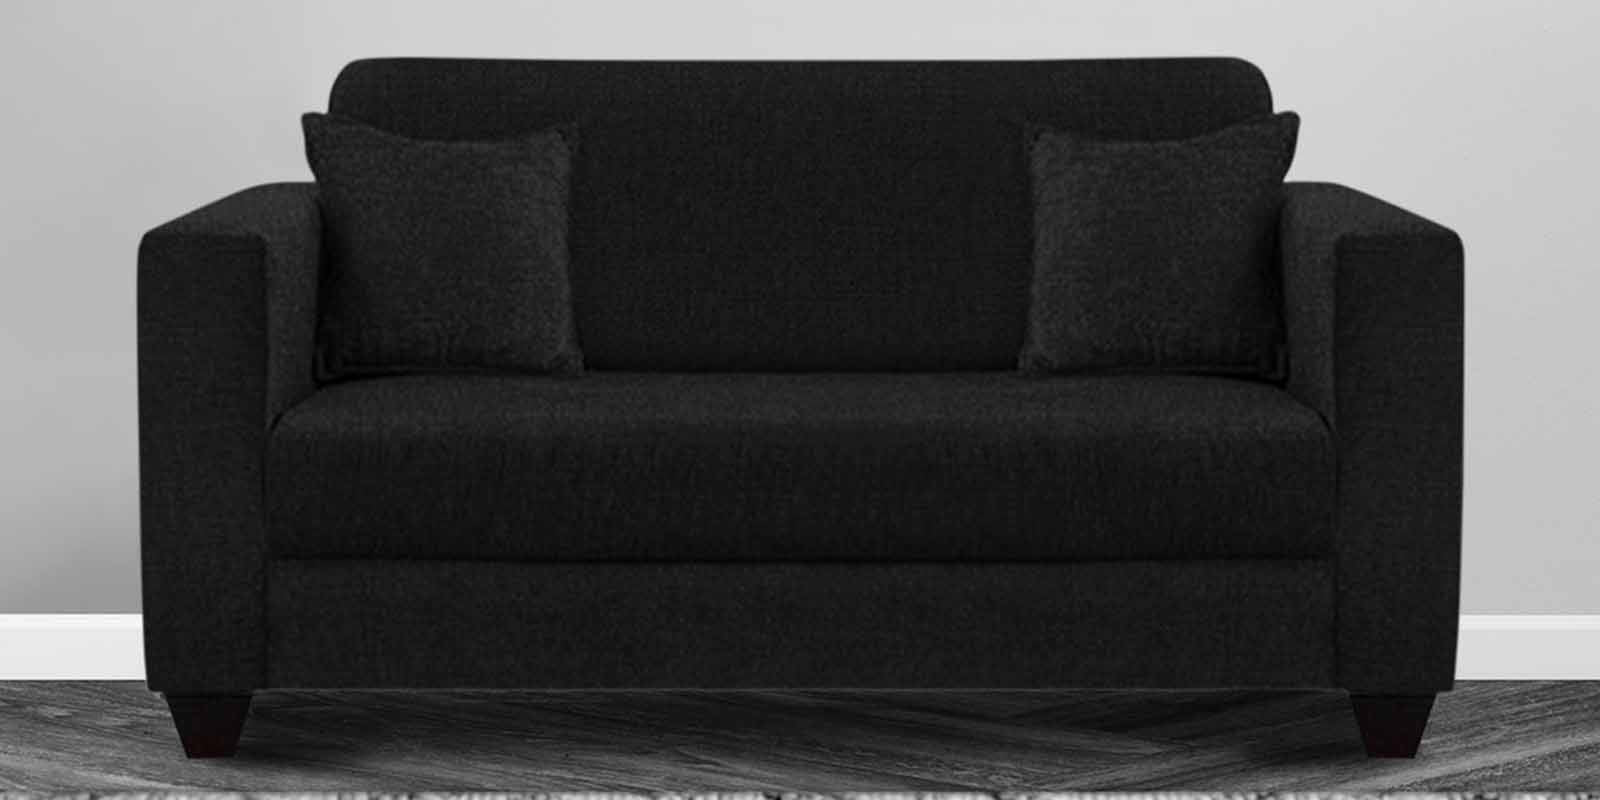 Nebula Fabric 2 Seater Sofa in Zed Black Colour